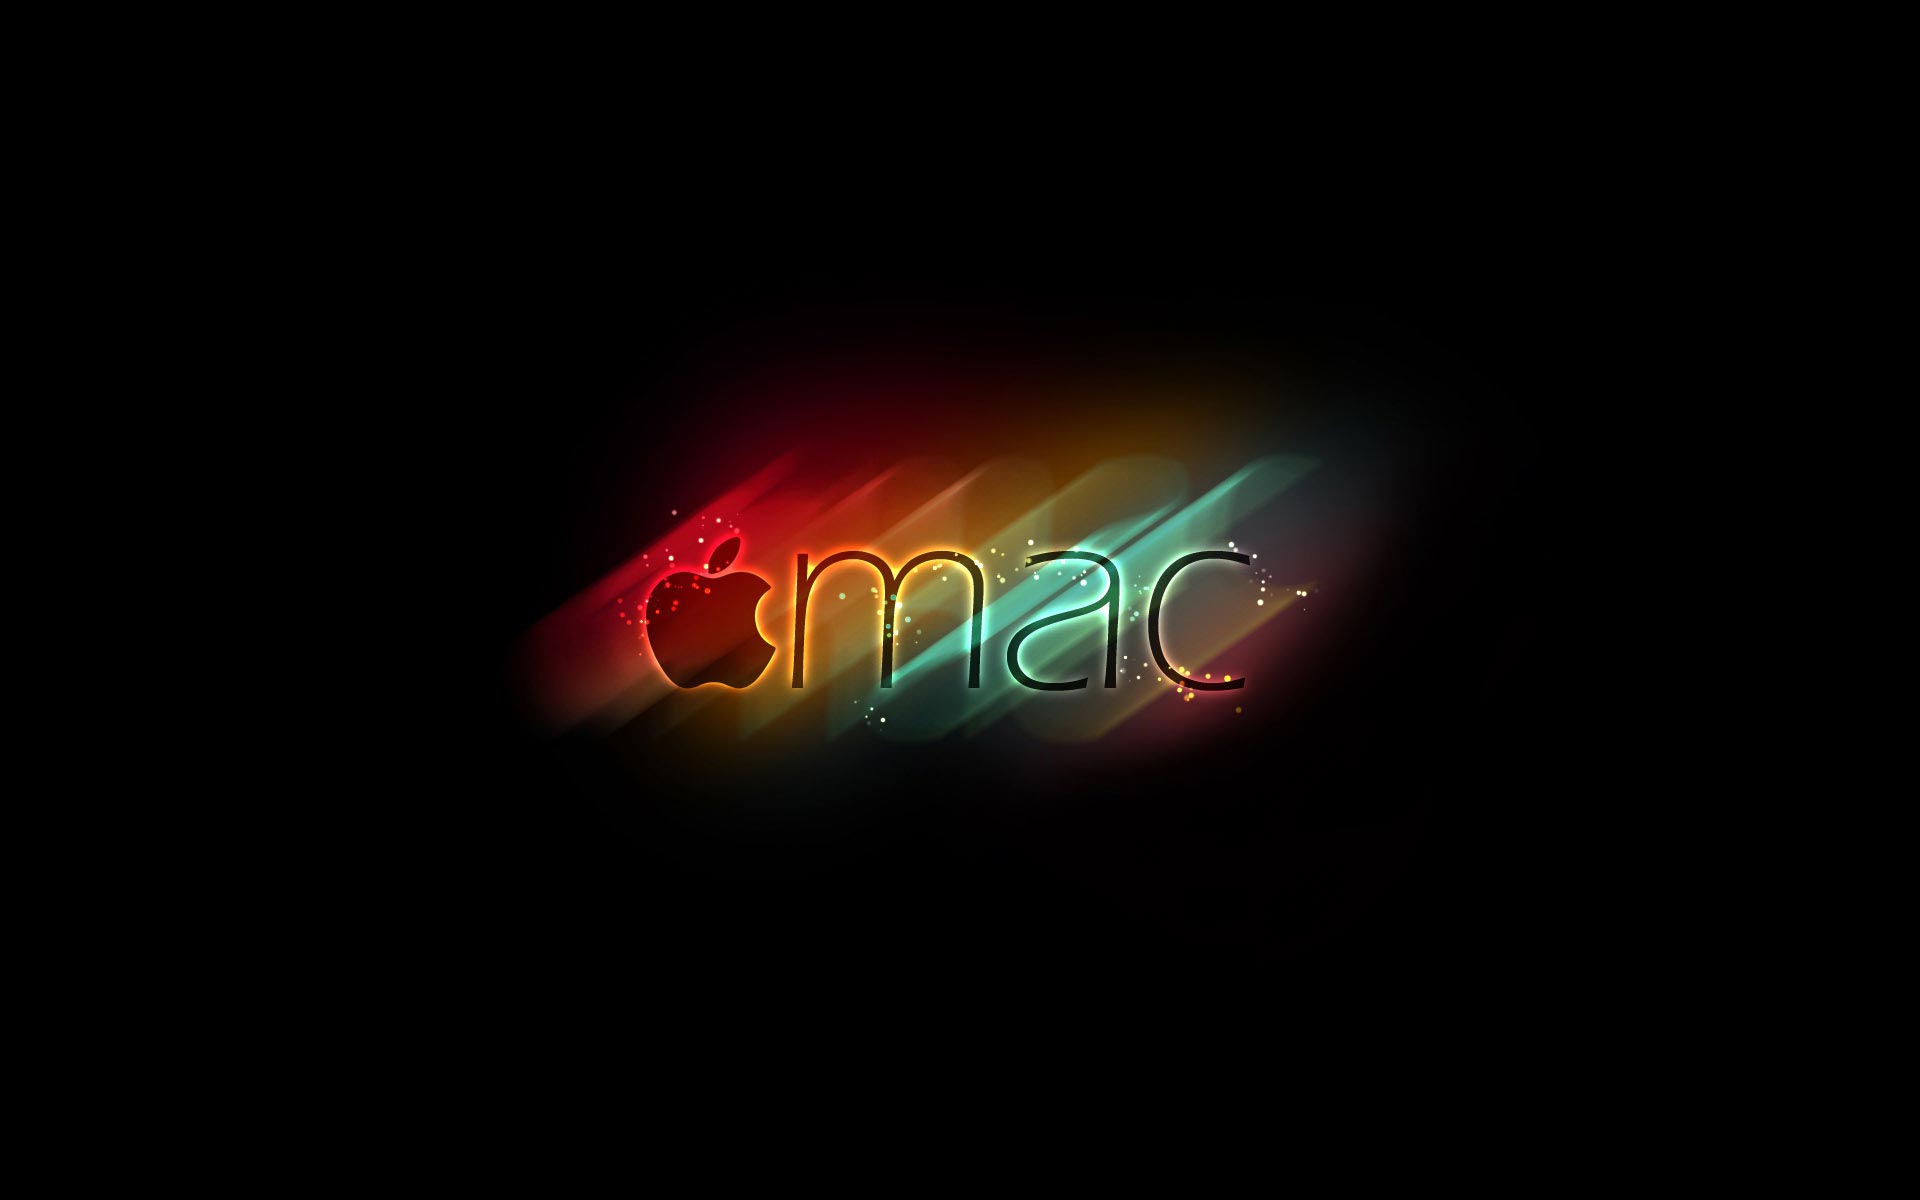 Apple Mac Book Pro desktop Wallpaper | WallpaperCow.com